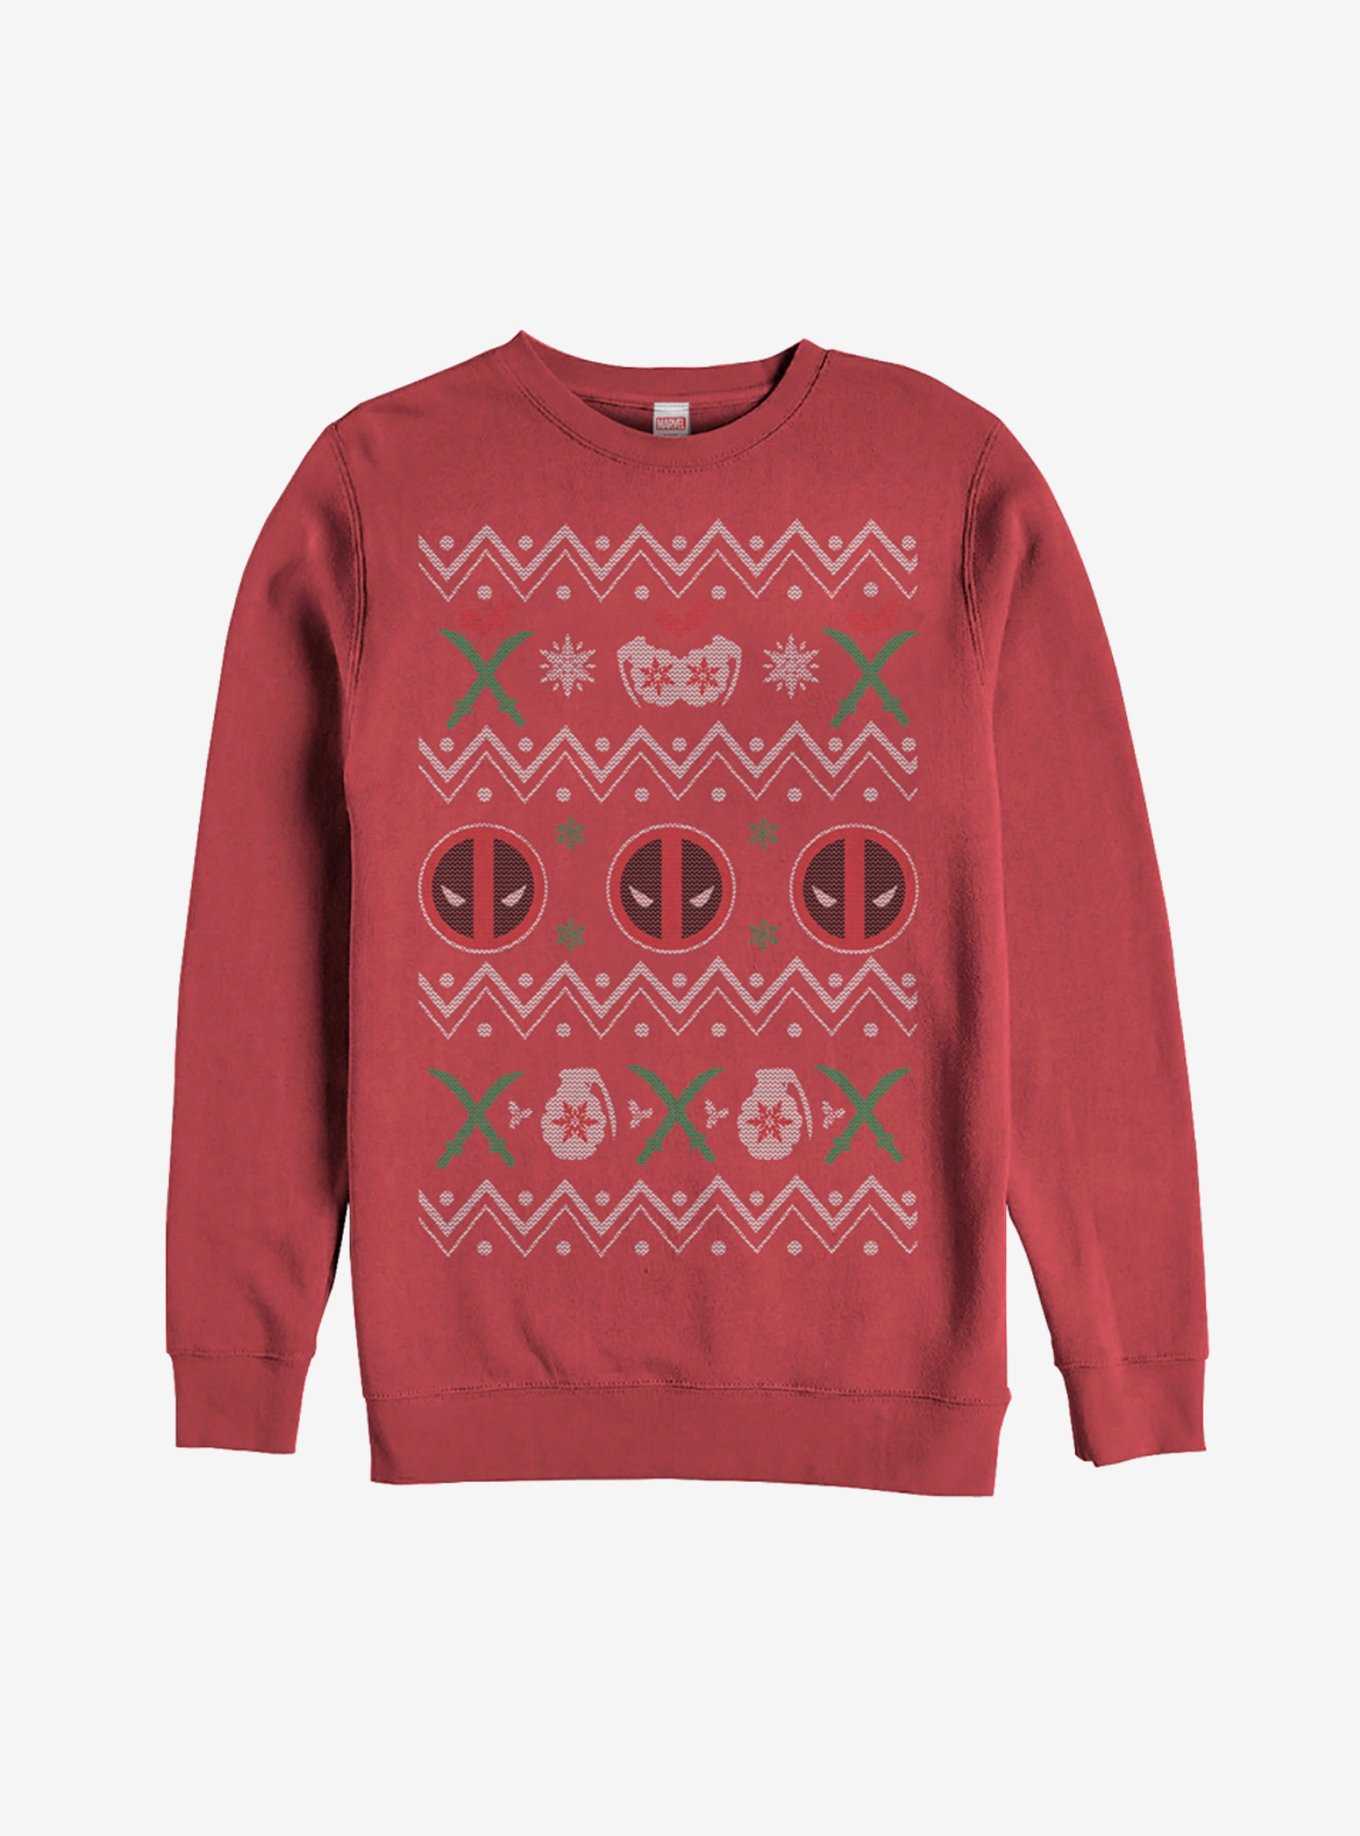 Marvel Deadpool Ugly Christmas Sweater Girls Sweatshirt, , hi-res